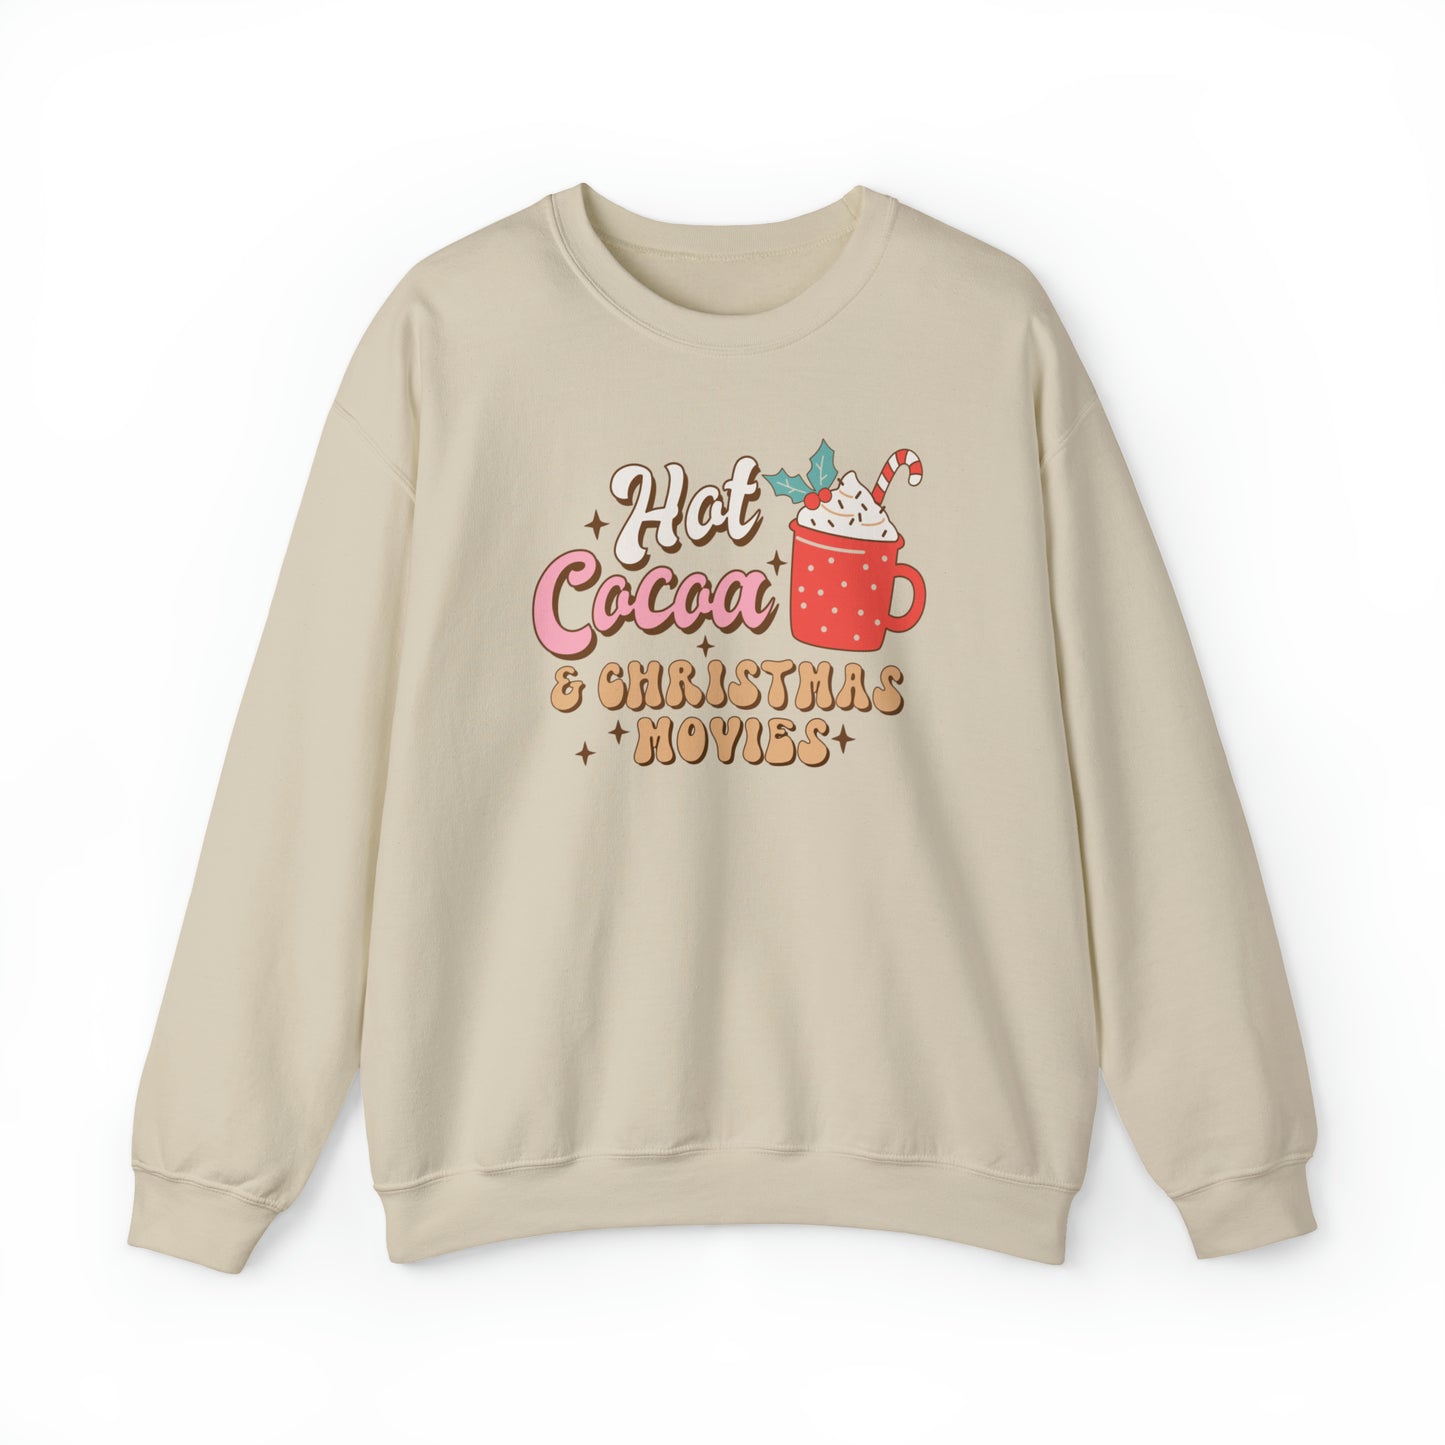 Hot Cocoa And Christmas Movies Christmas Crewneck Sweater